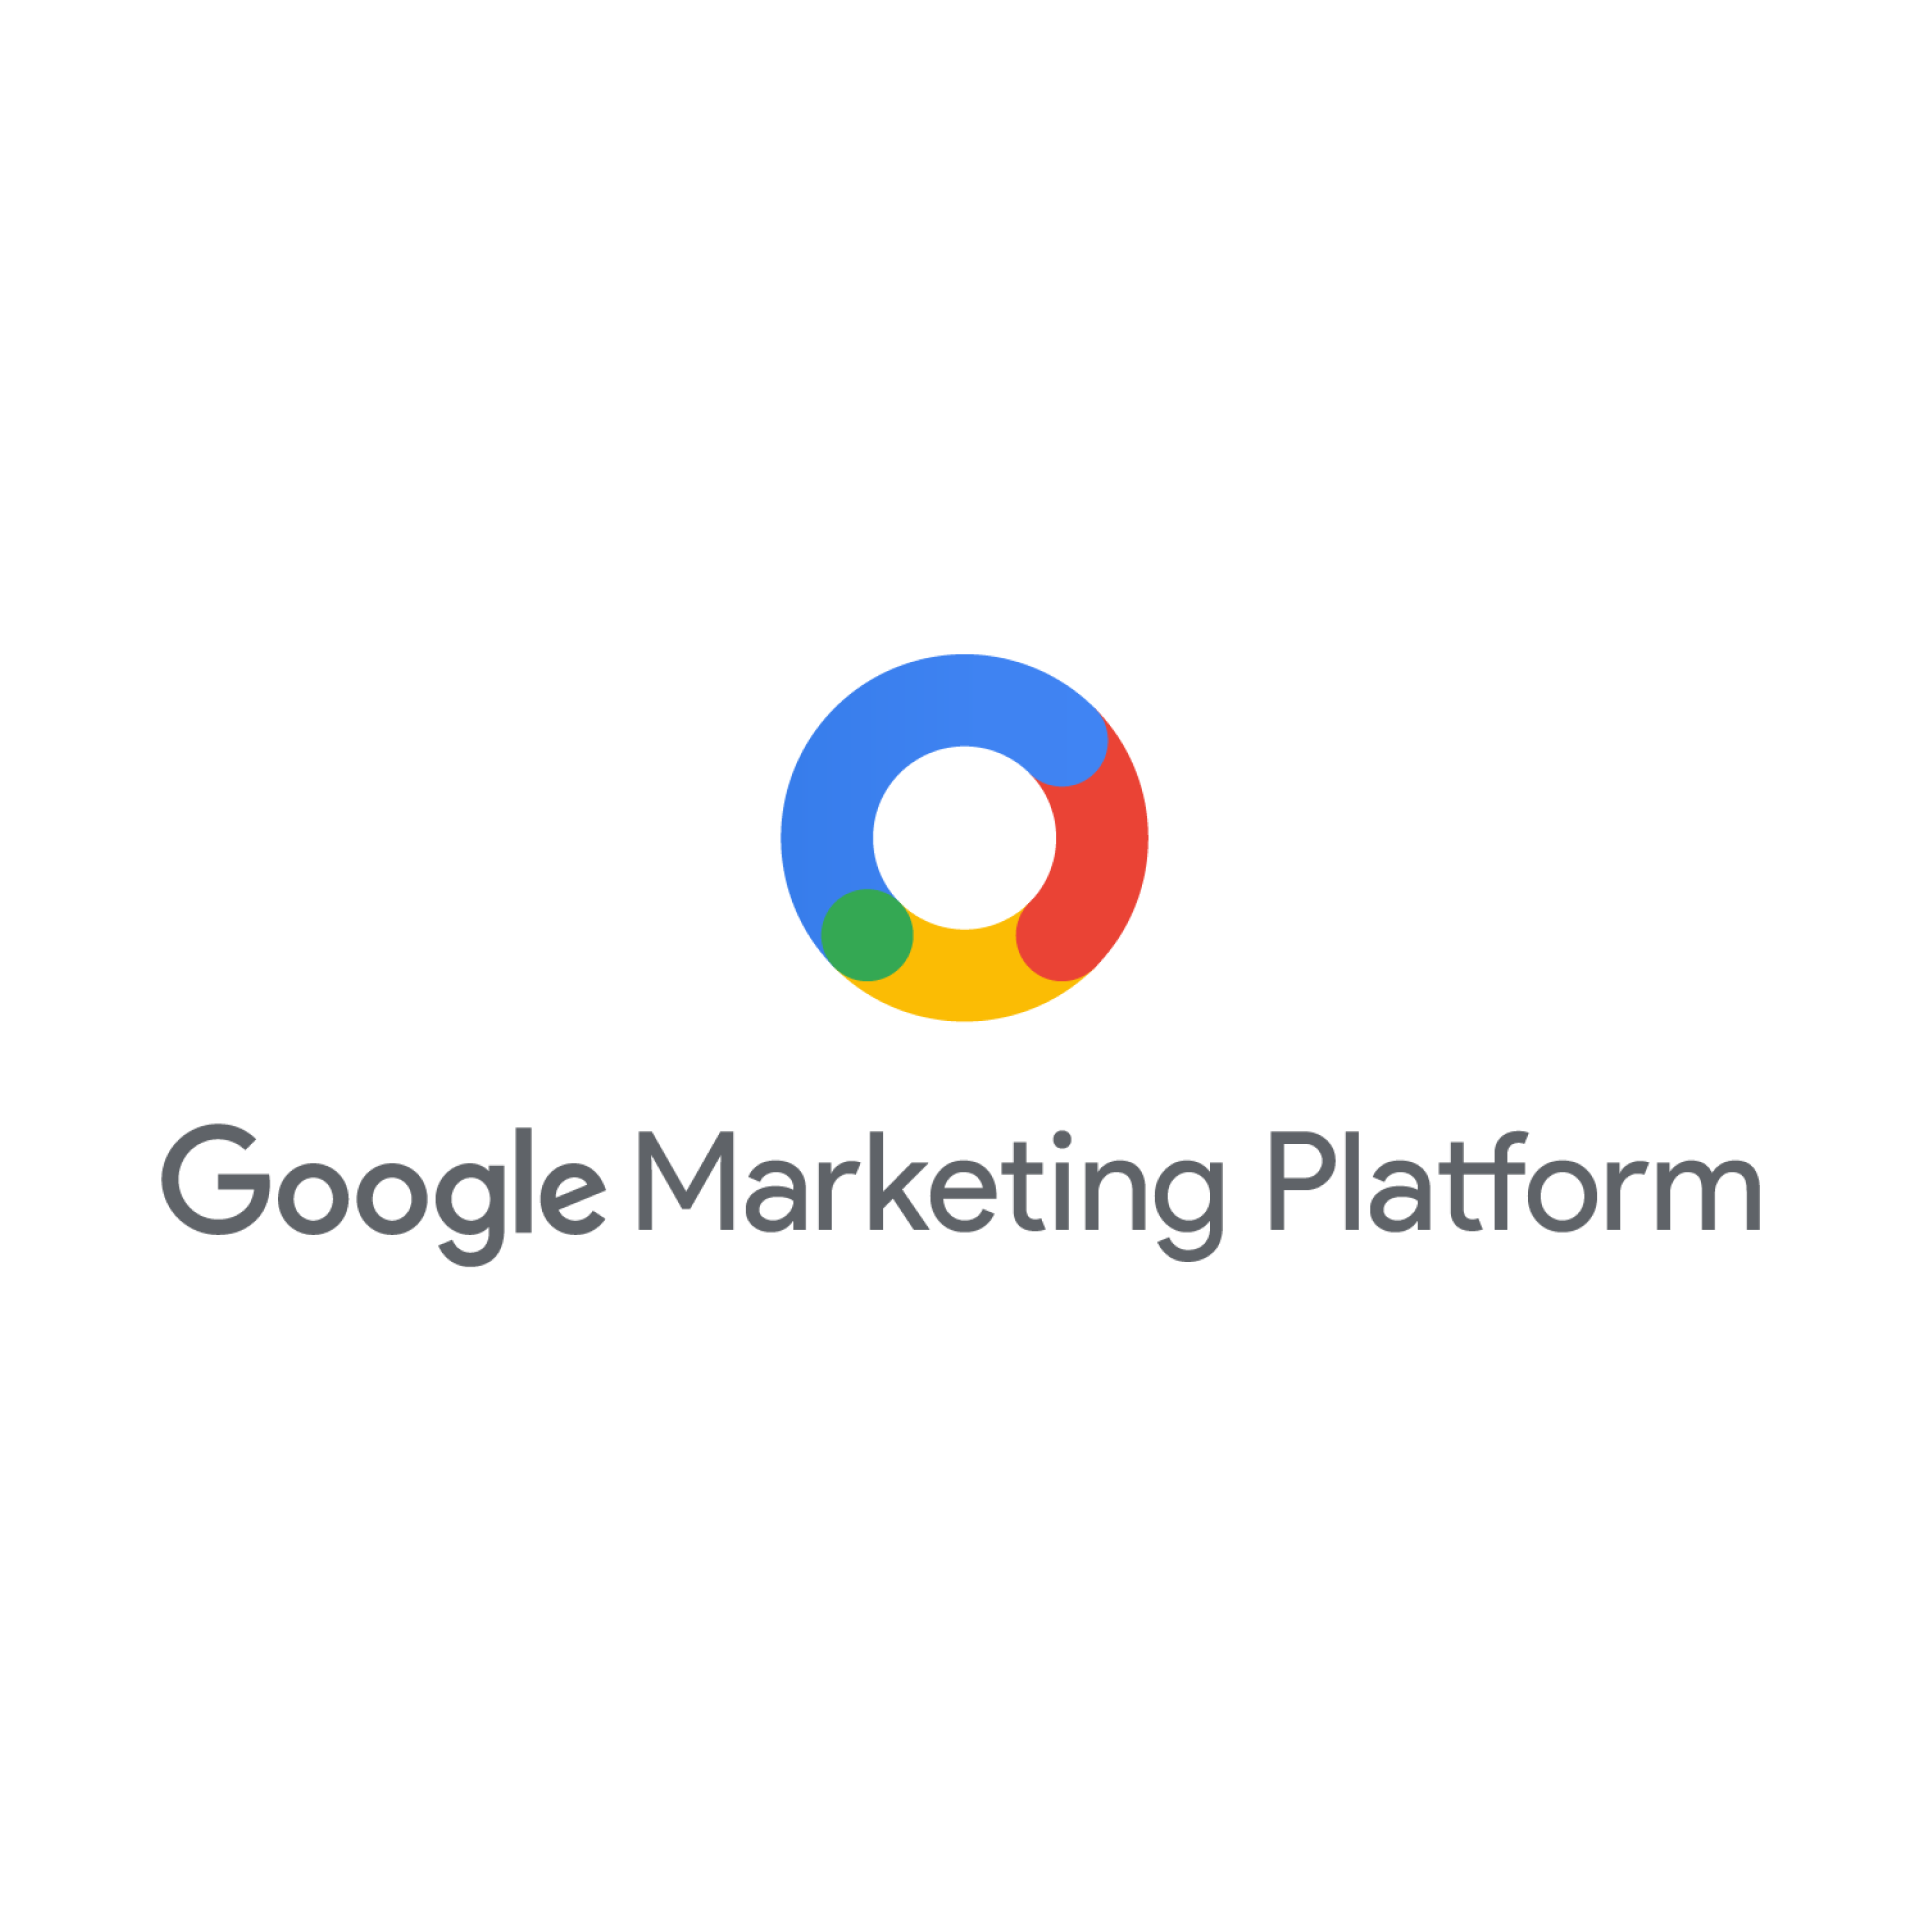 Marketingplatform.google.com के लिए प्रॉक्सी